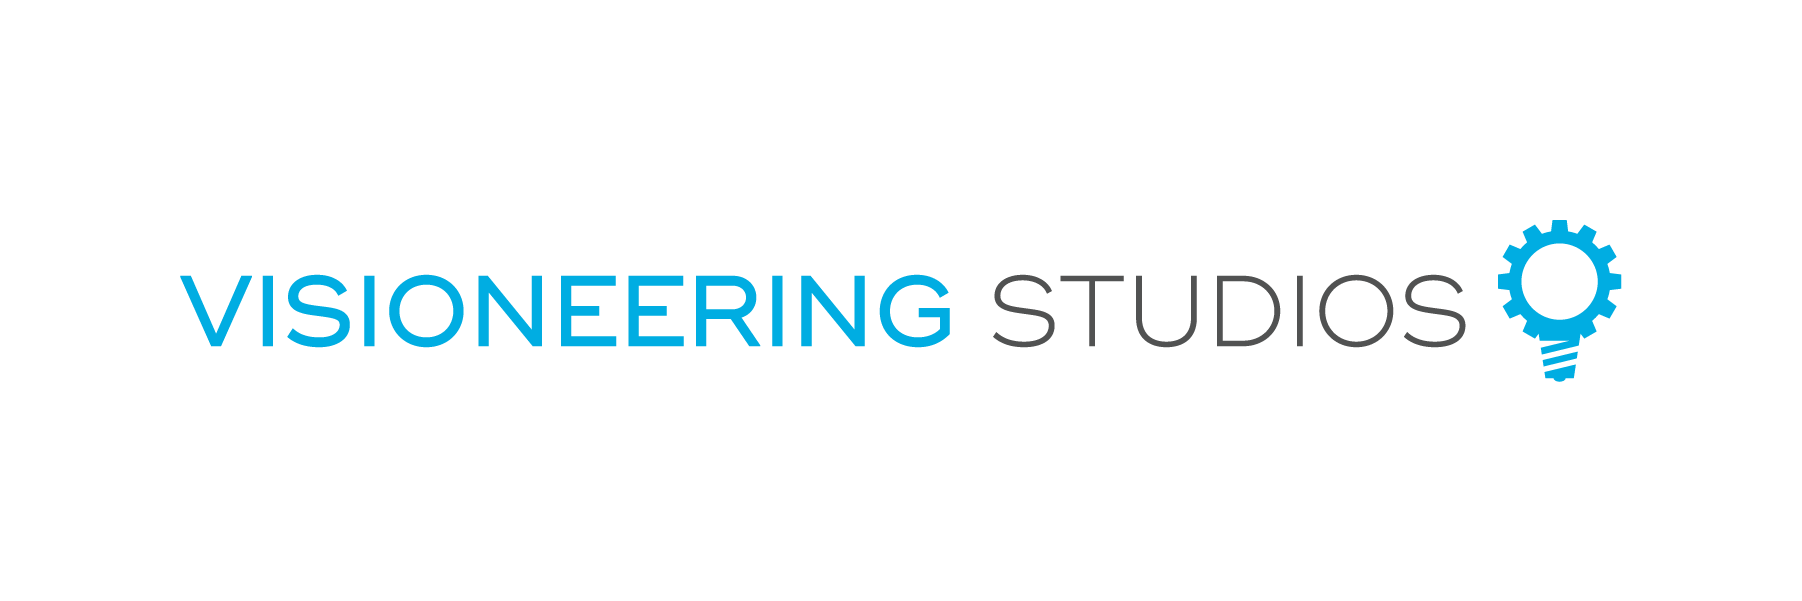 Visioneering Studios, Inc. logo